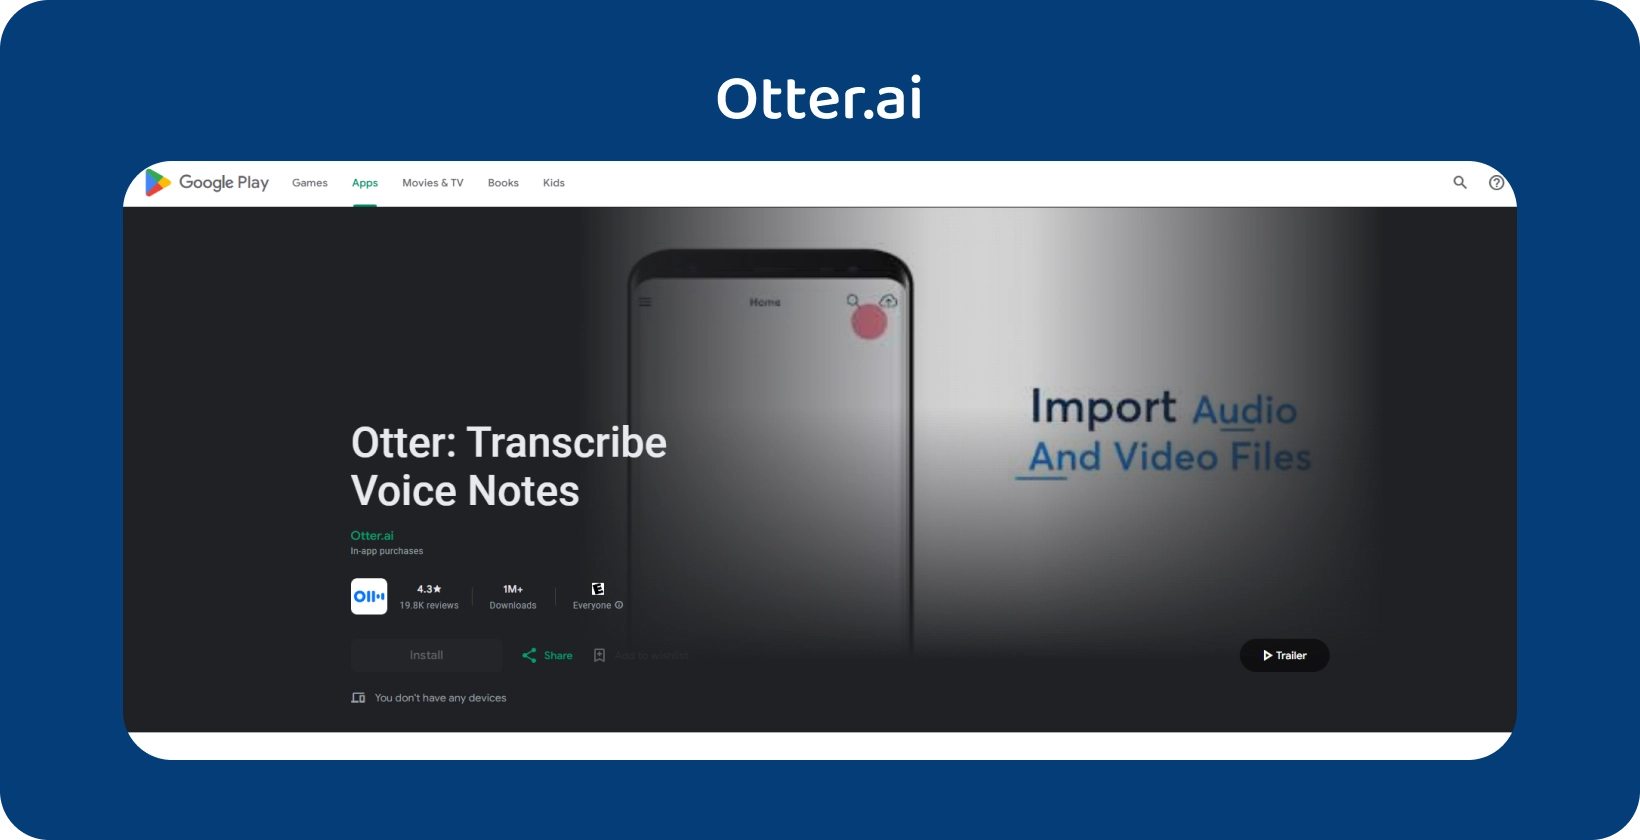 Otter.ai aplikasi di Google Play, menampilkan transkripsi catatan suara dan kemampuan impor file audio / video.